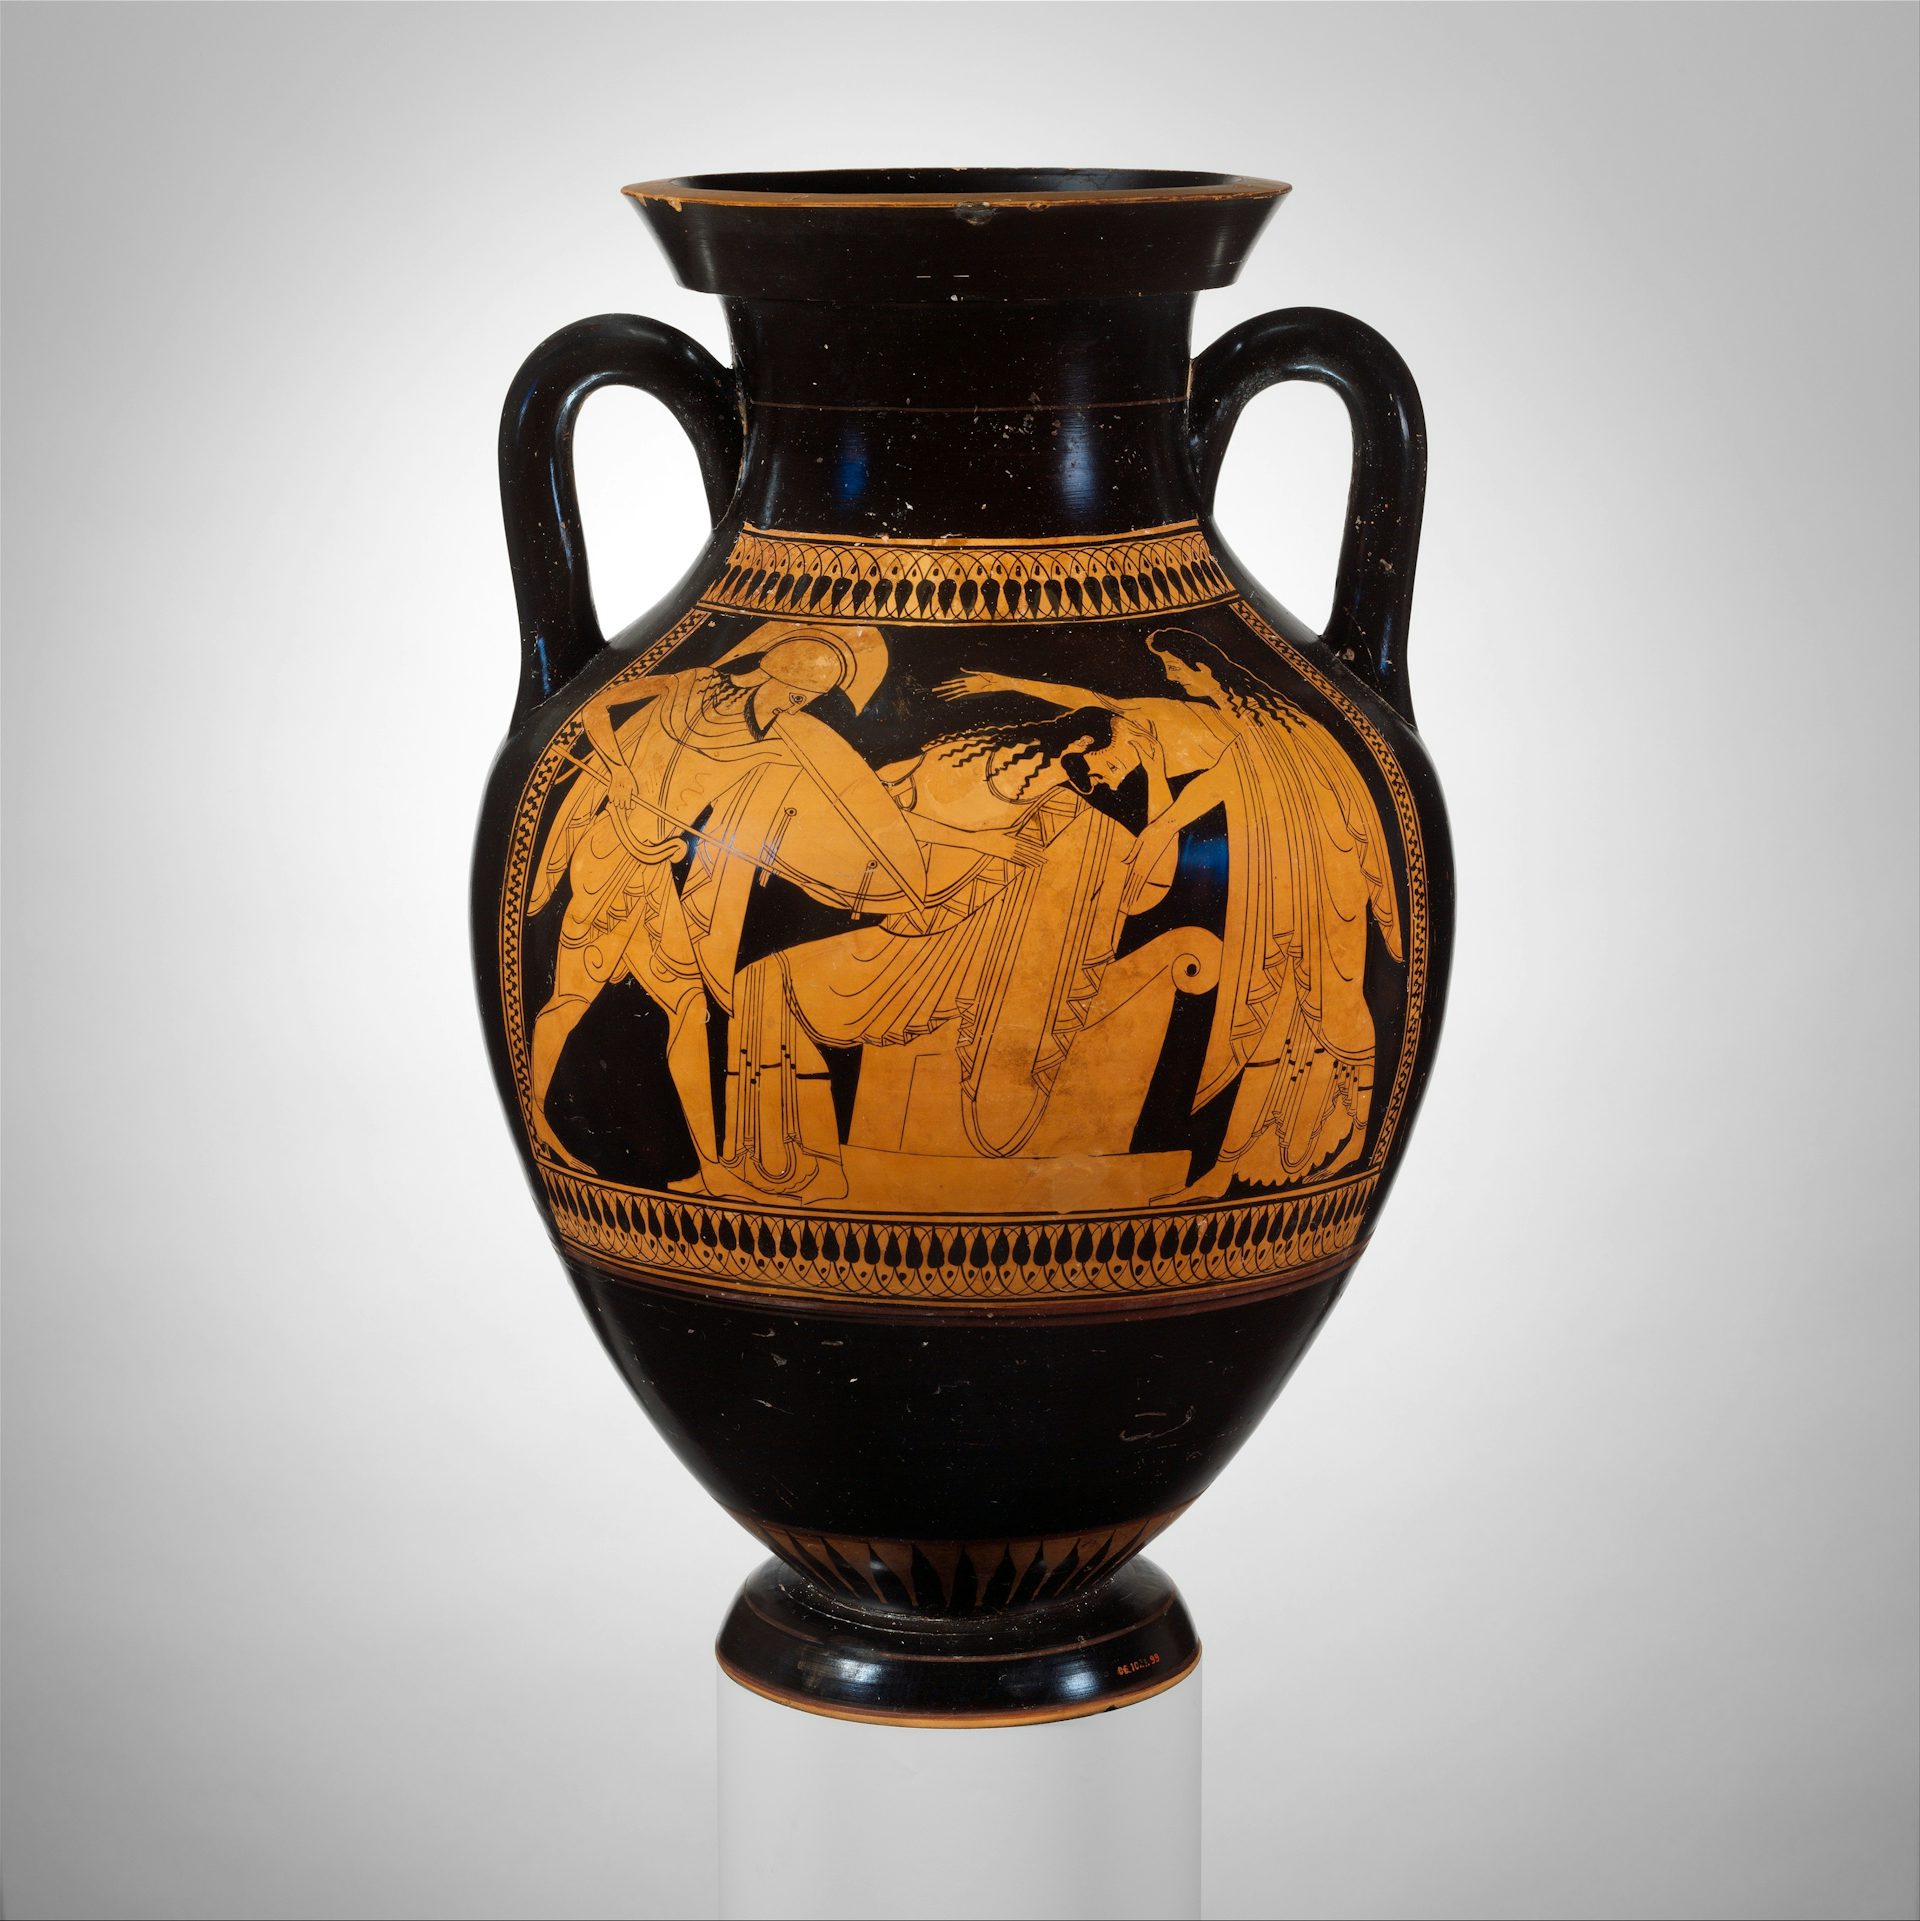 Vase painting of Neoptolemus killing Priam, attributed to the Nikoxenos Painter